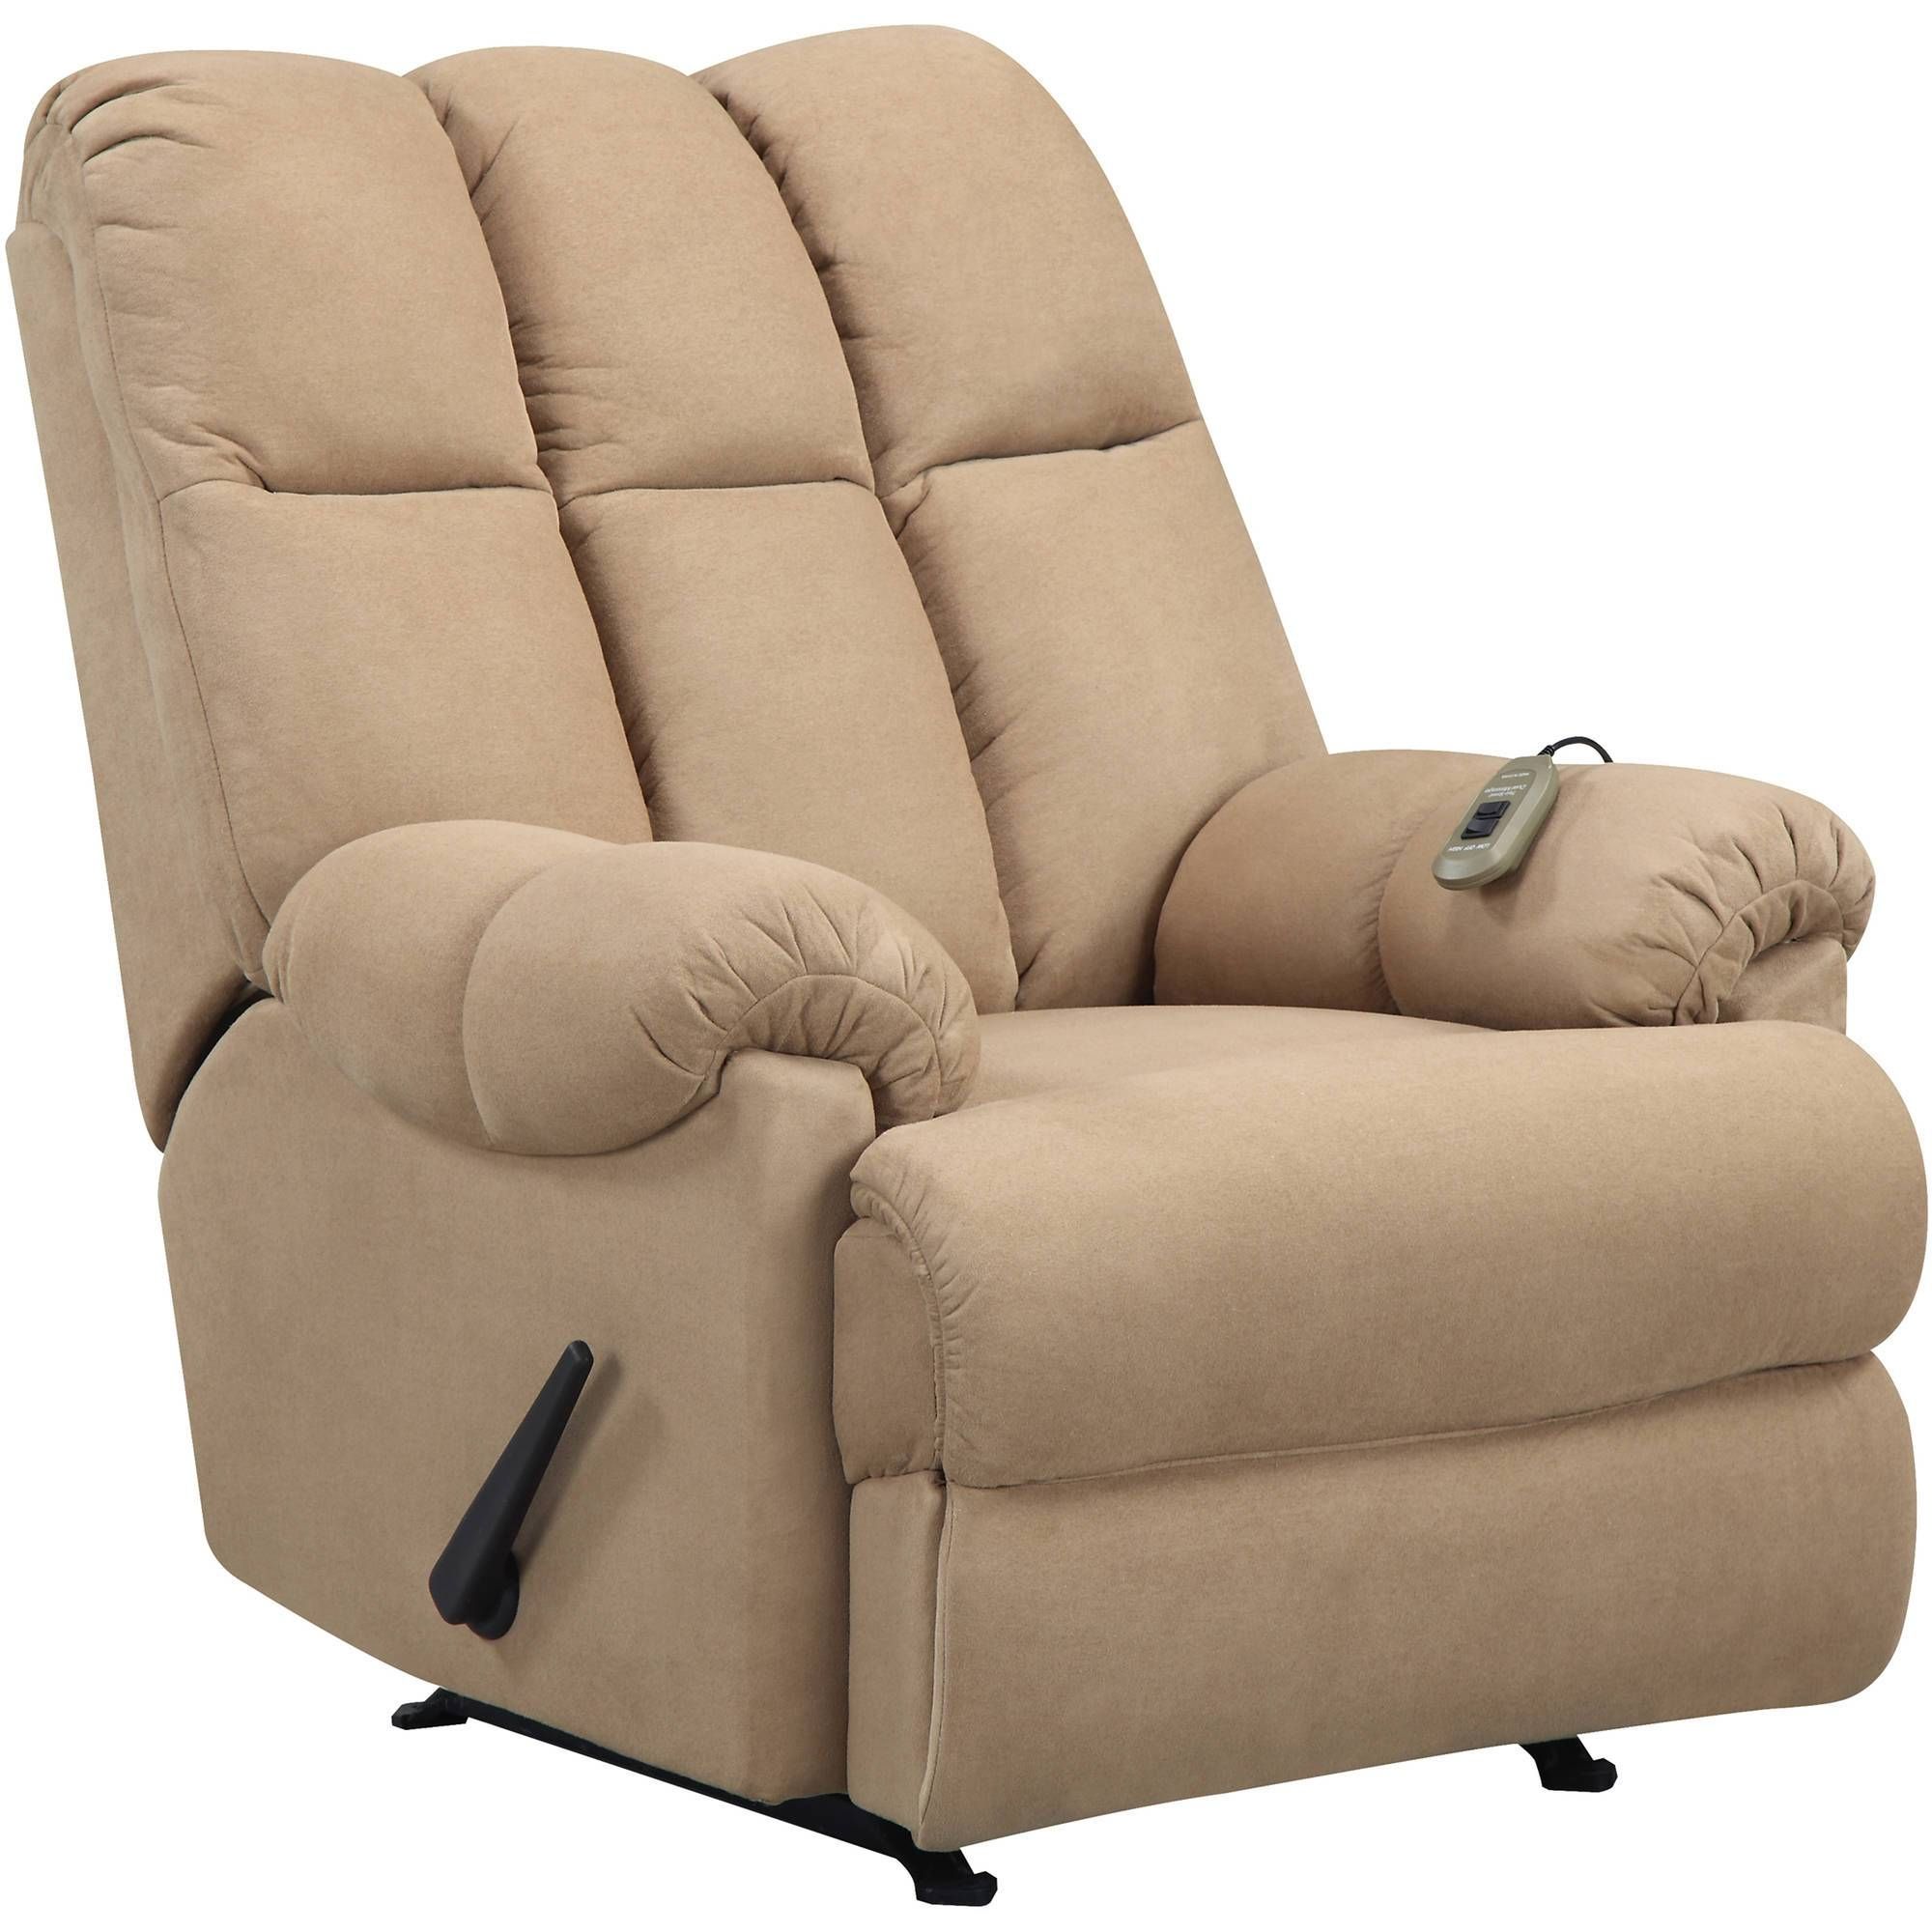 Sofas Center : Literarywondrous Lazy Boy Recliner Sofa Image Within Sofa Chair Recliner (Photo 28 of 30)